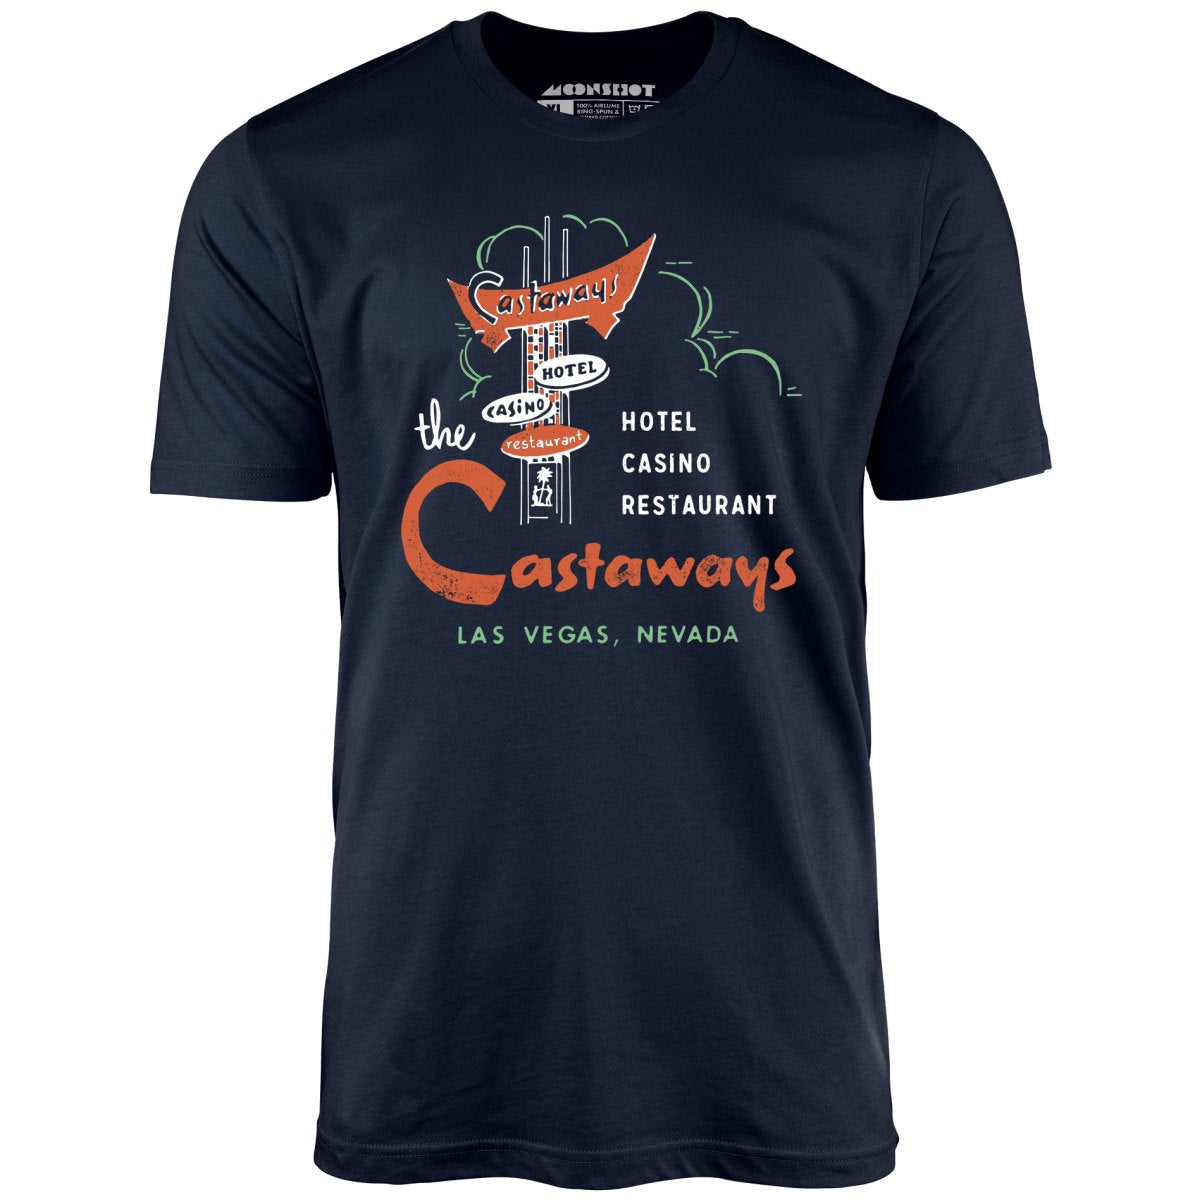 Castaways - Vintage Las Vegas - Unisex T-Shirt